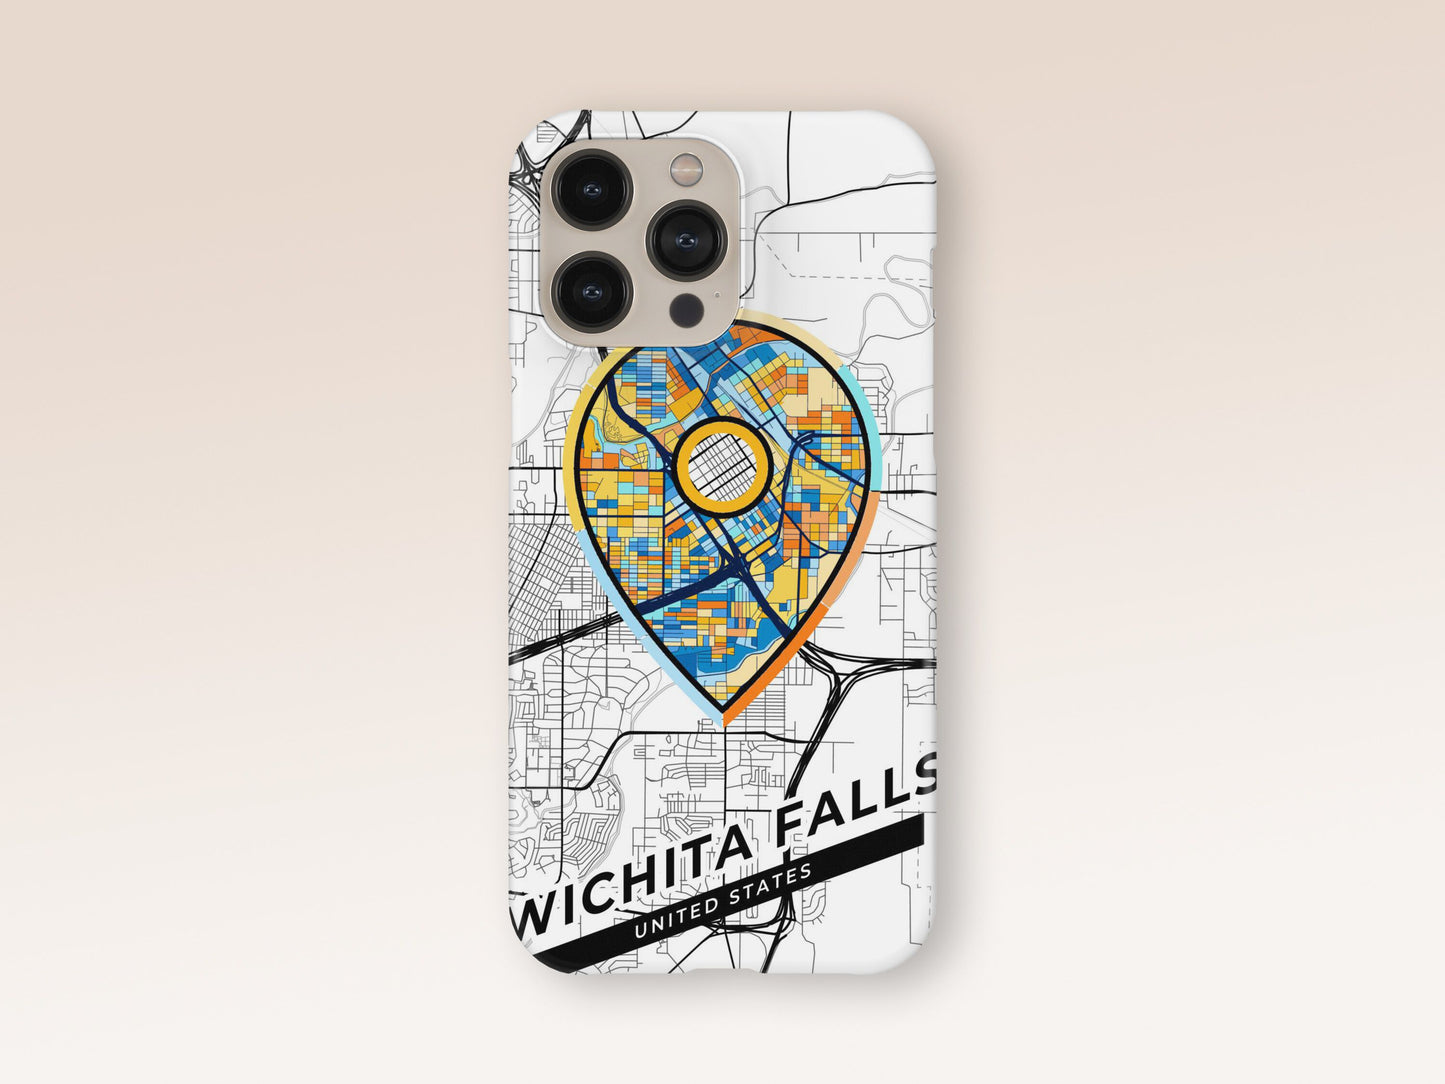 Wichita Falls Texas slim phone case with colorful icon 1